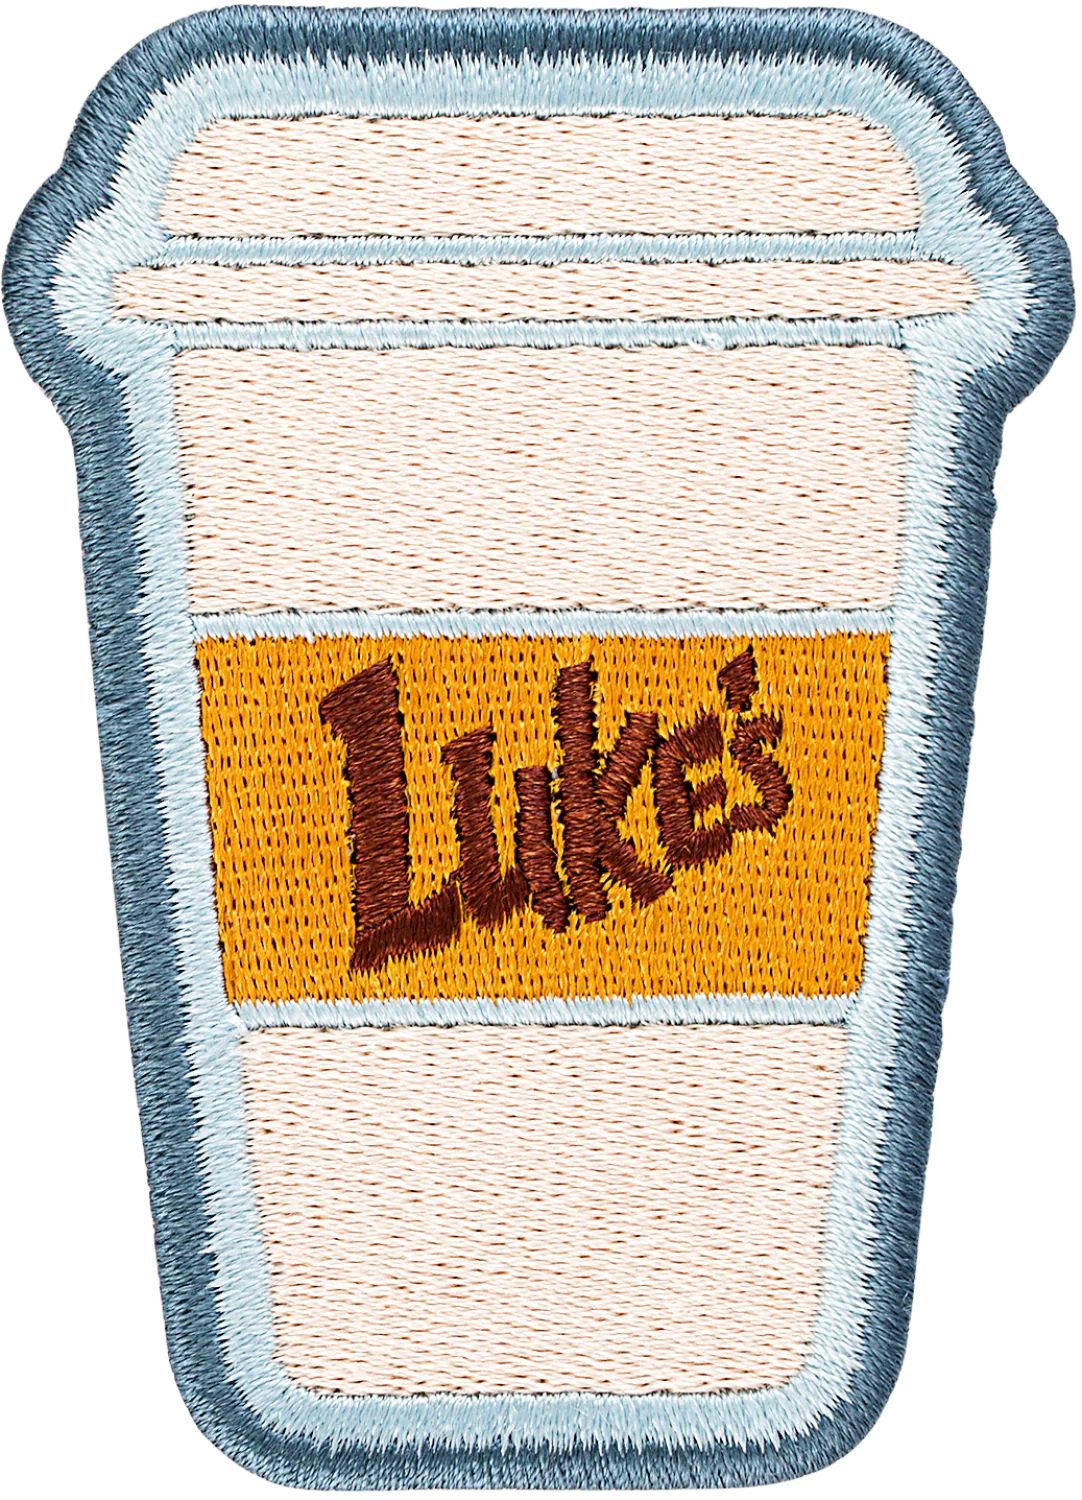 Luke's Coffee Patch | Stoney Clover Lane